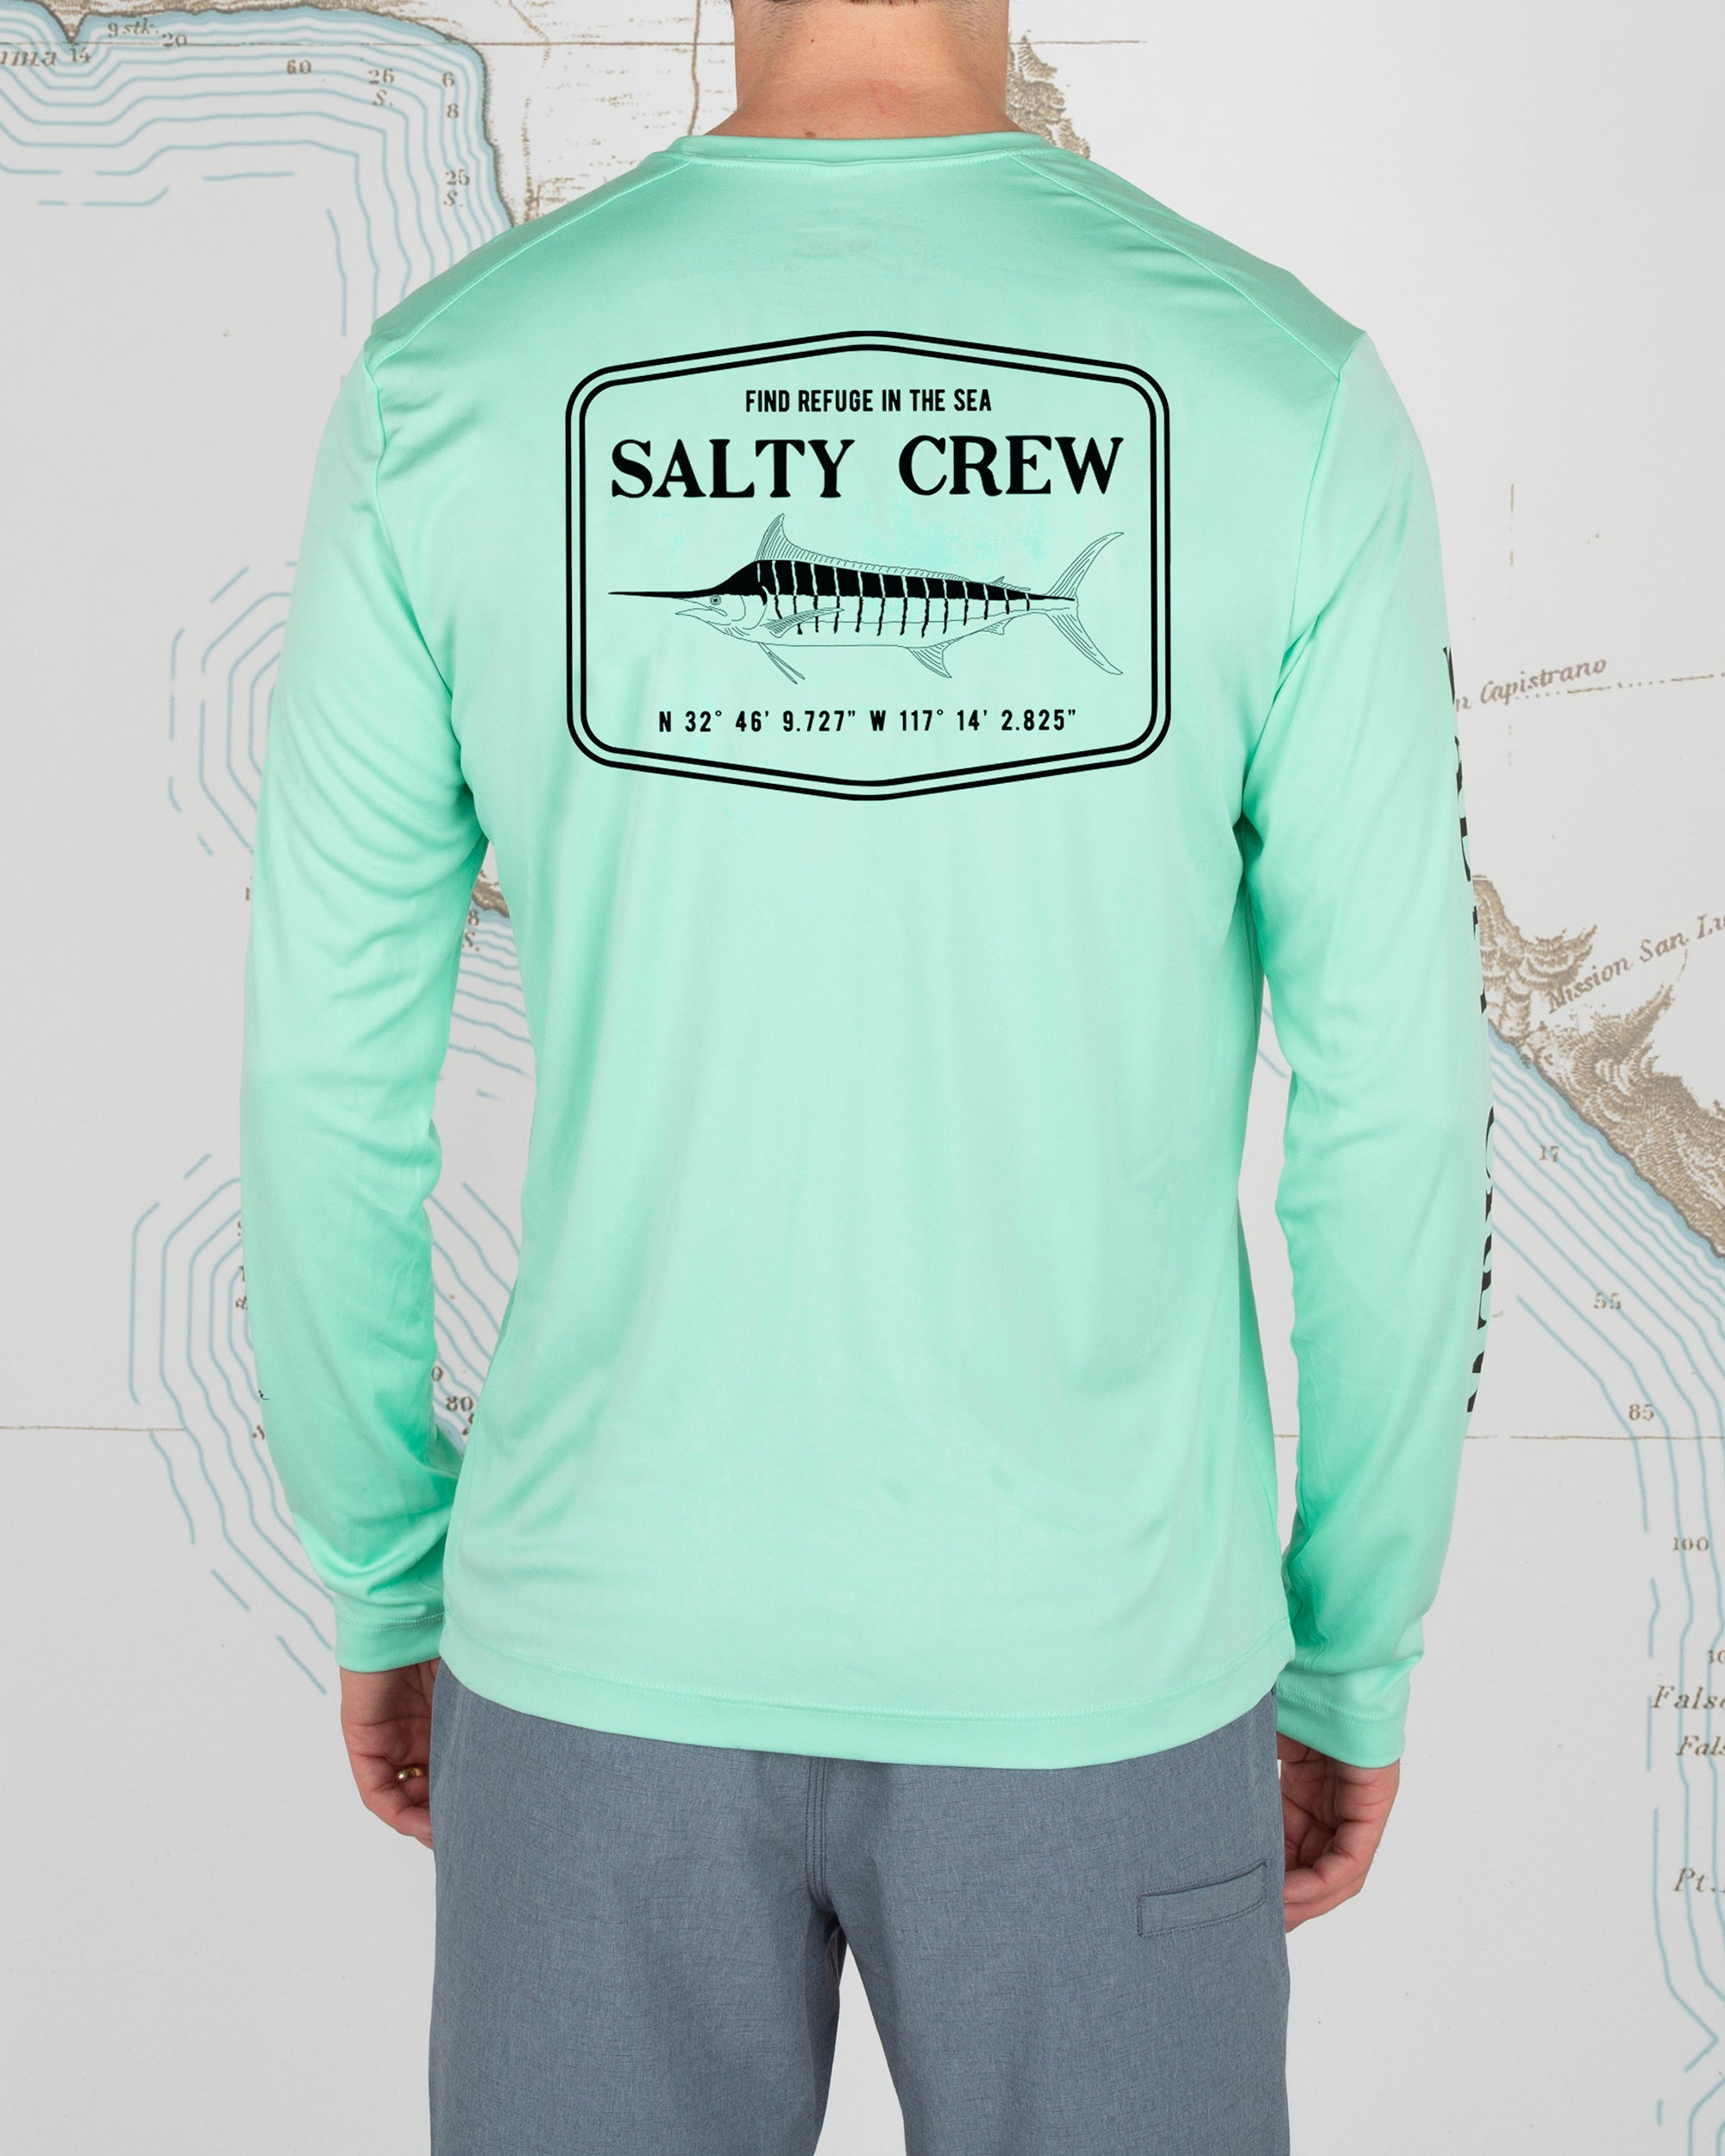 Salty Crew Stealth Sunshirt